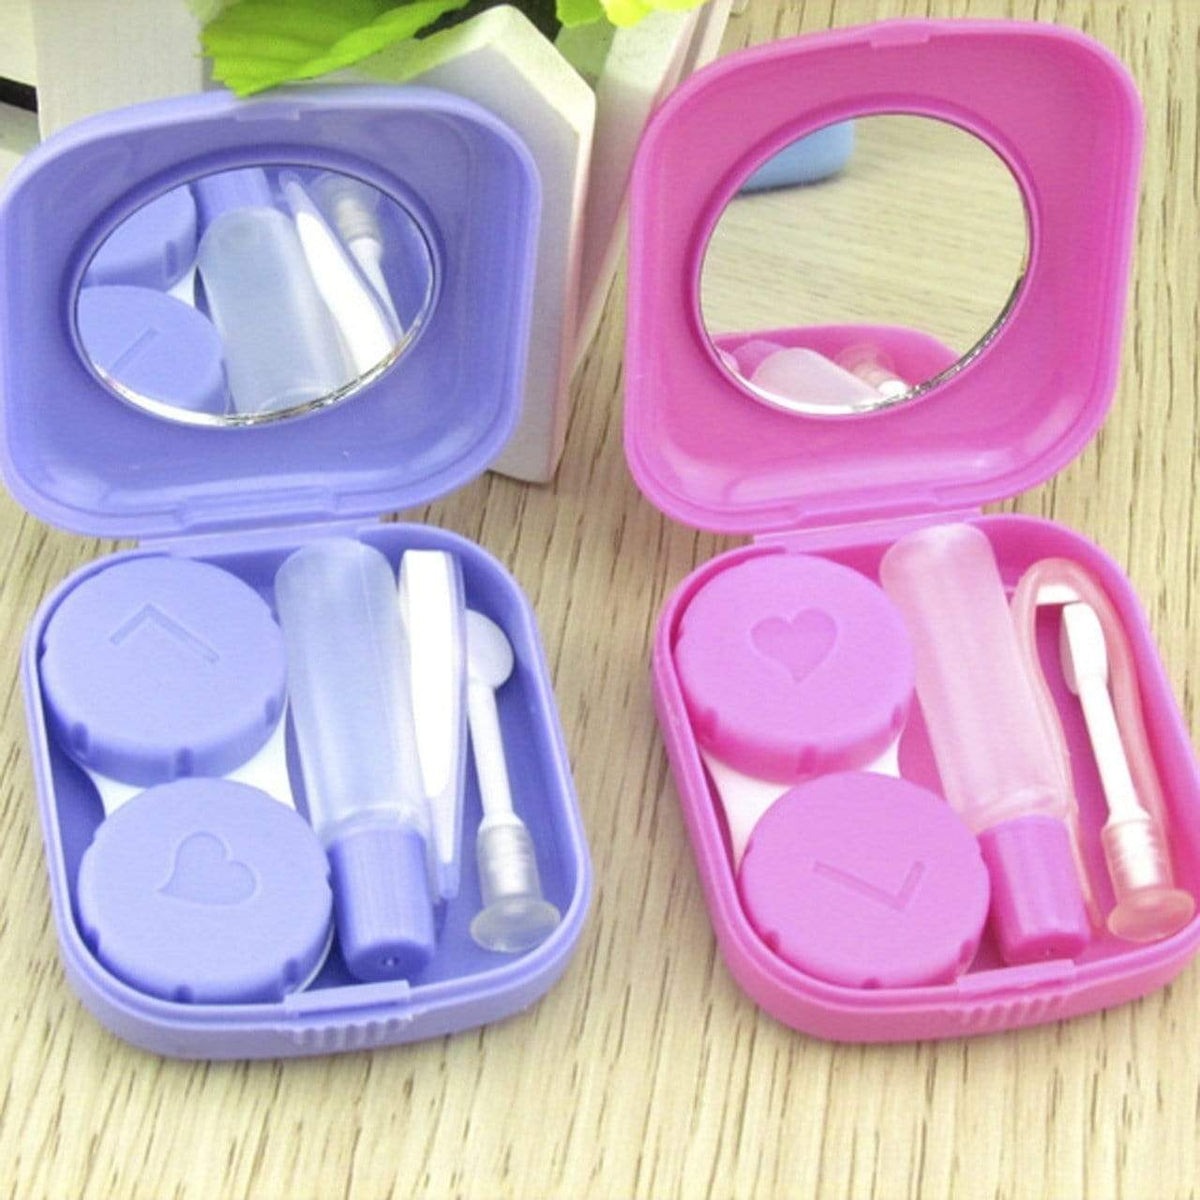 SZgentle Accessories Cute Compact Travel Contact Lens Kit